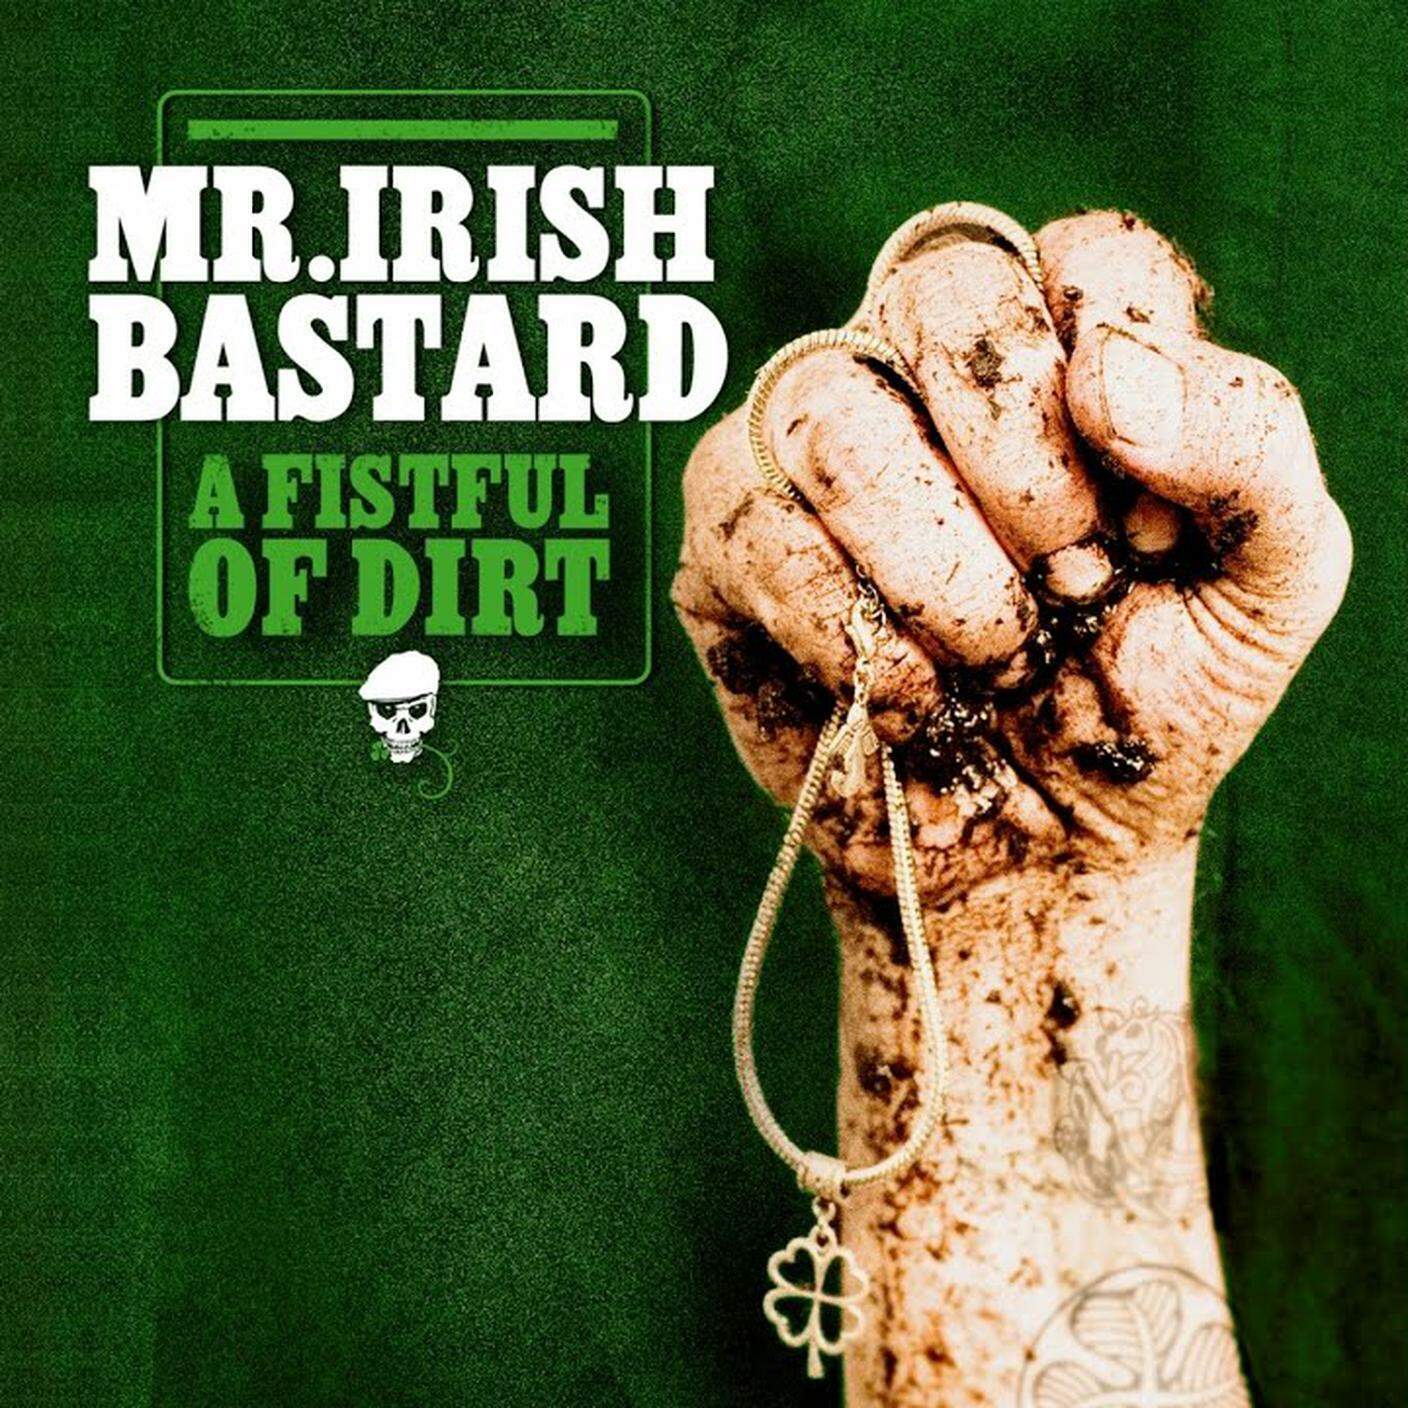 Mr. Irish Bastard, "A Fistful Of Dirt", Reedo Records (dettaglio copertina)